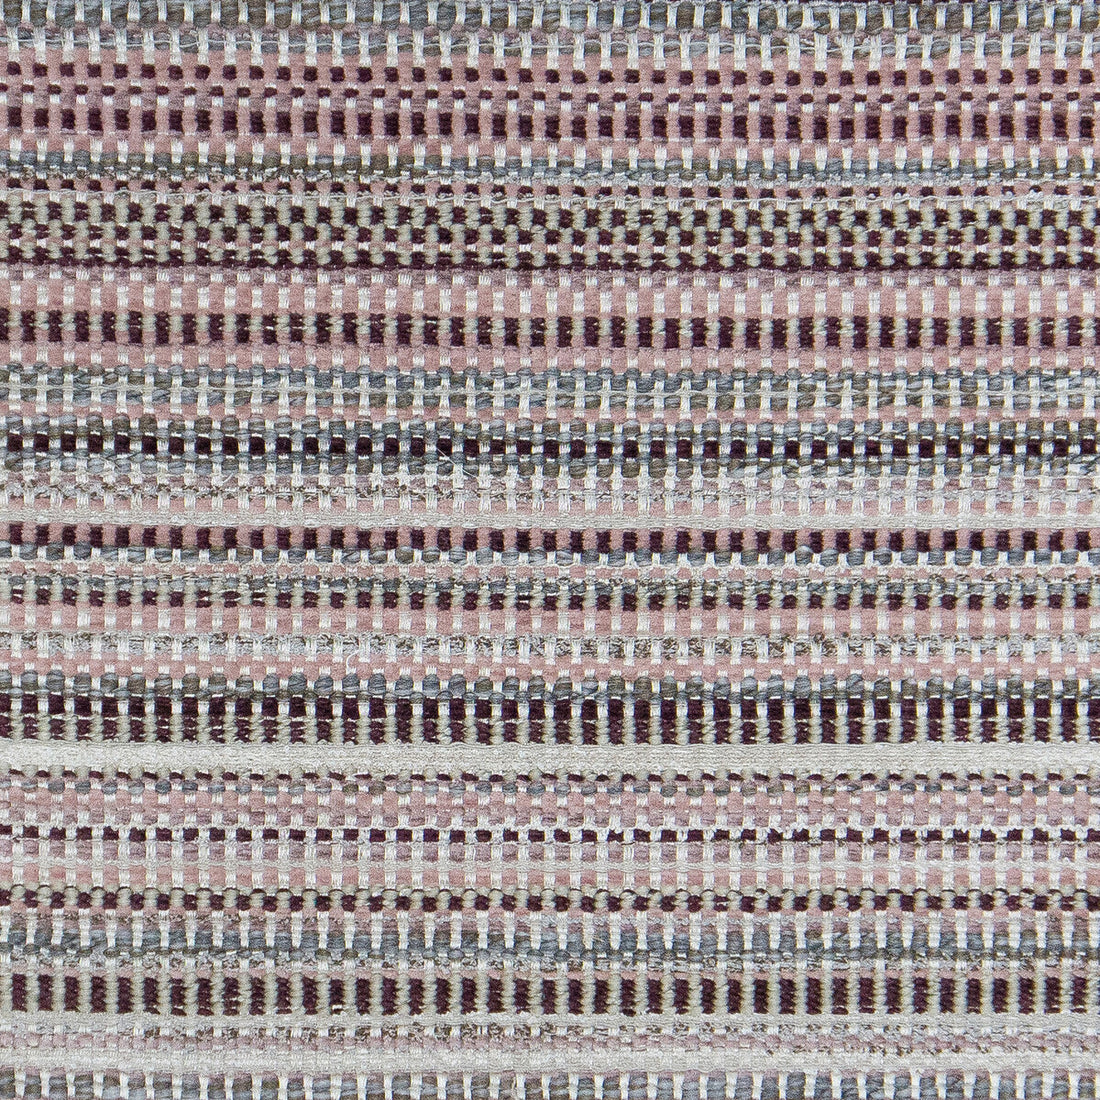 Hernan fabric in rosa color - pattern GDT5592.004.0 - by Gaston y Daniela in the Gaston Nuevo Mundo collection